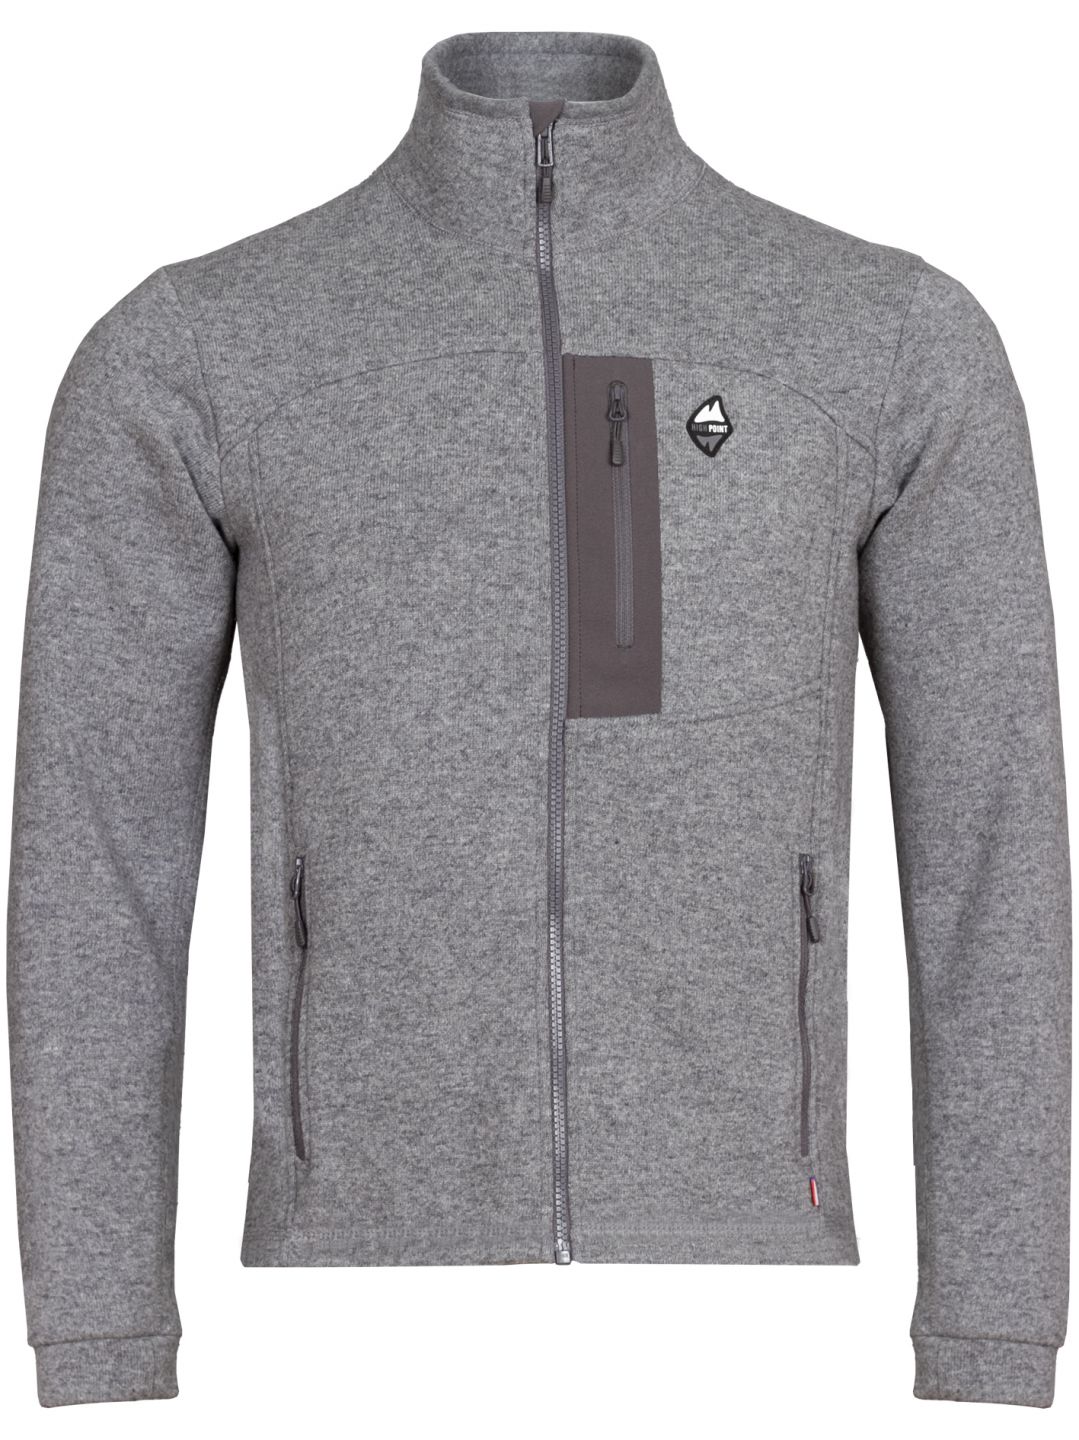 HIGH POINT SKYWOOL 6.0 sweater Grey varianta: XL